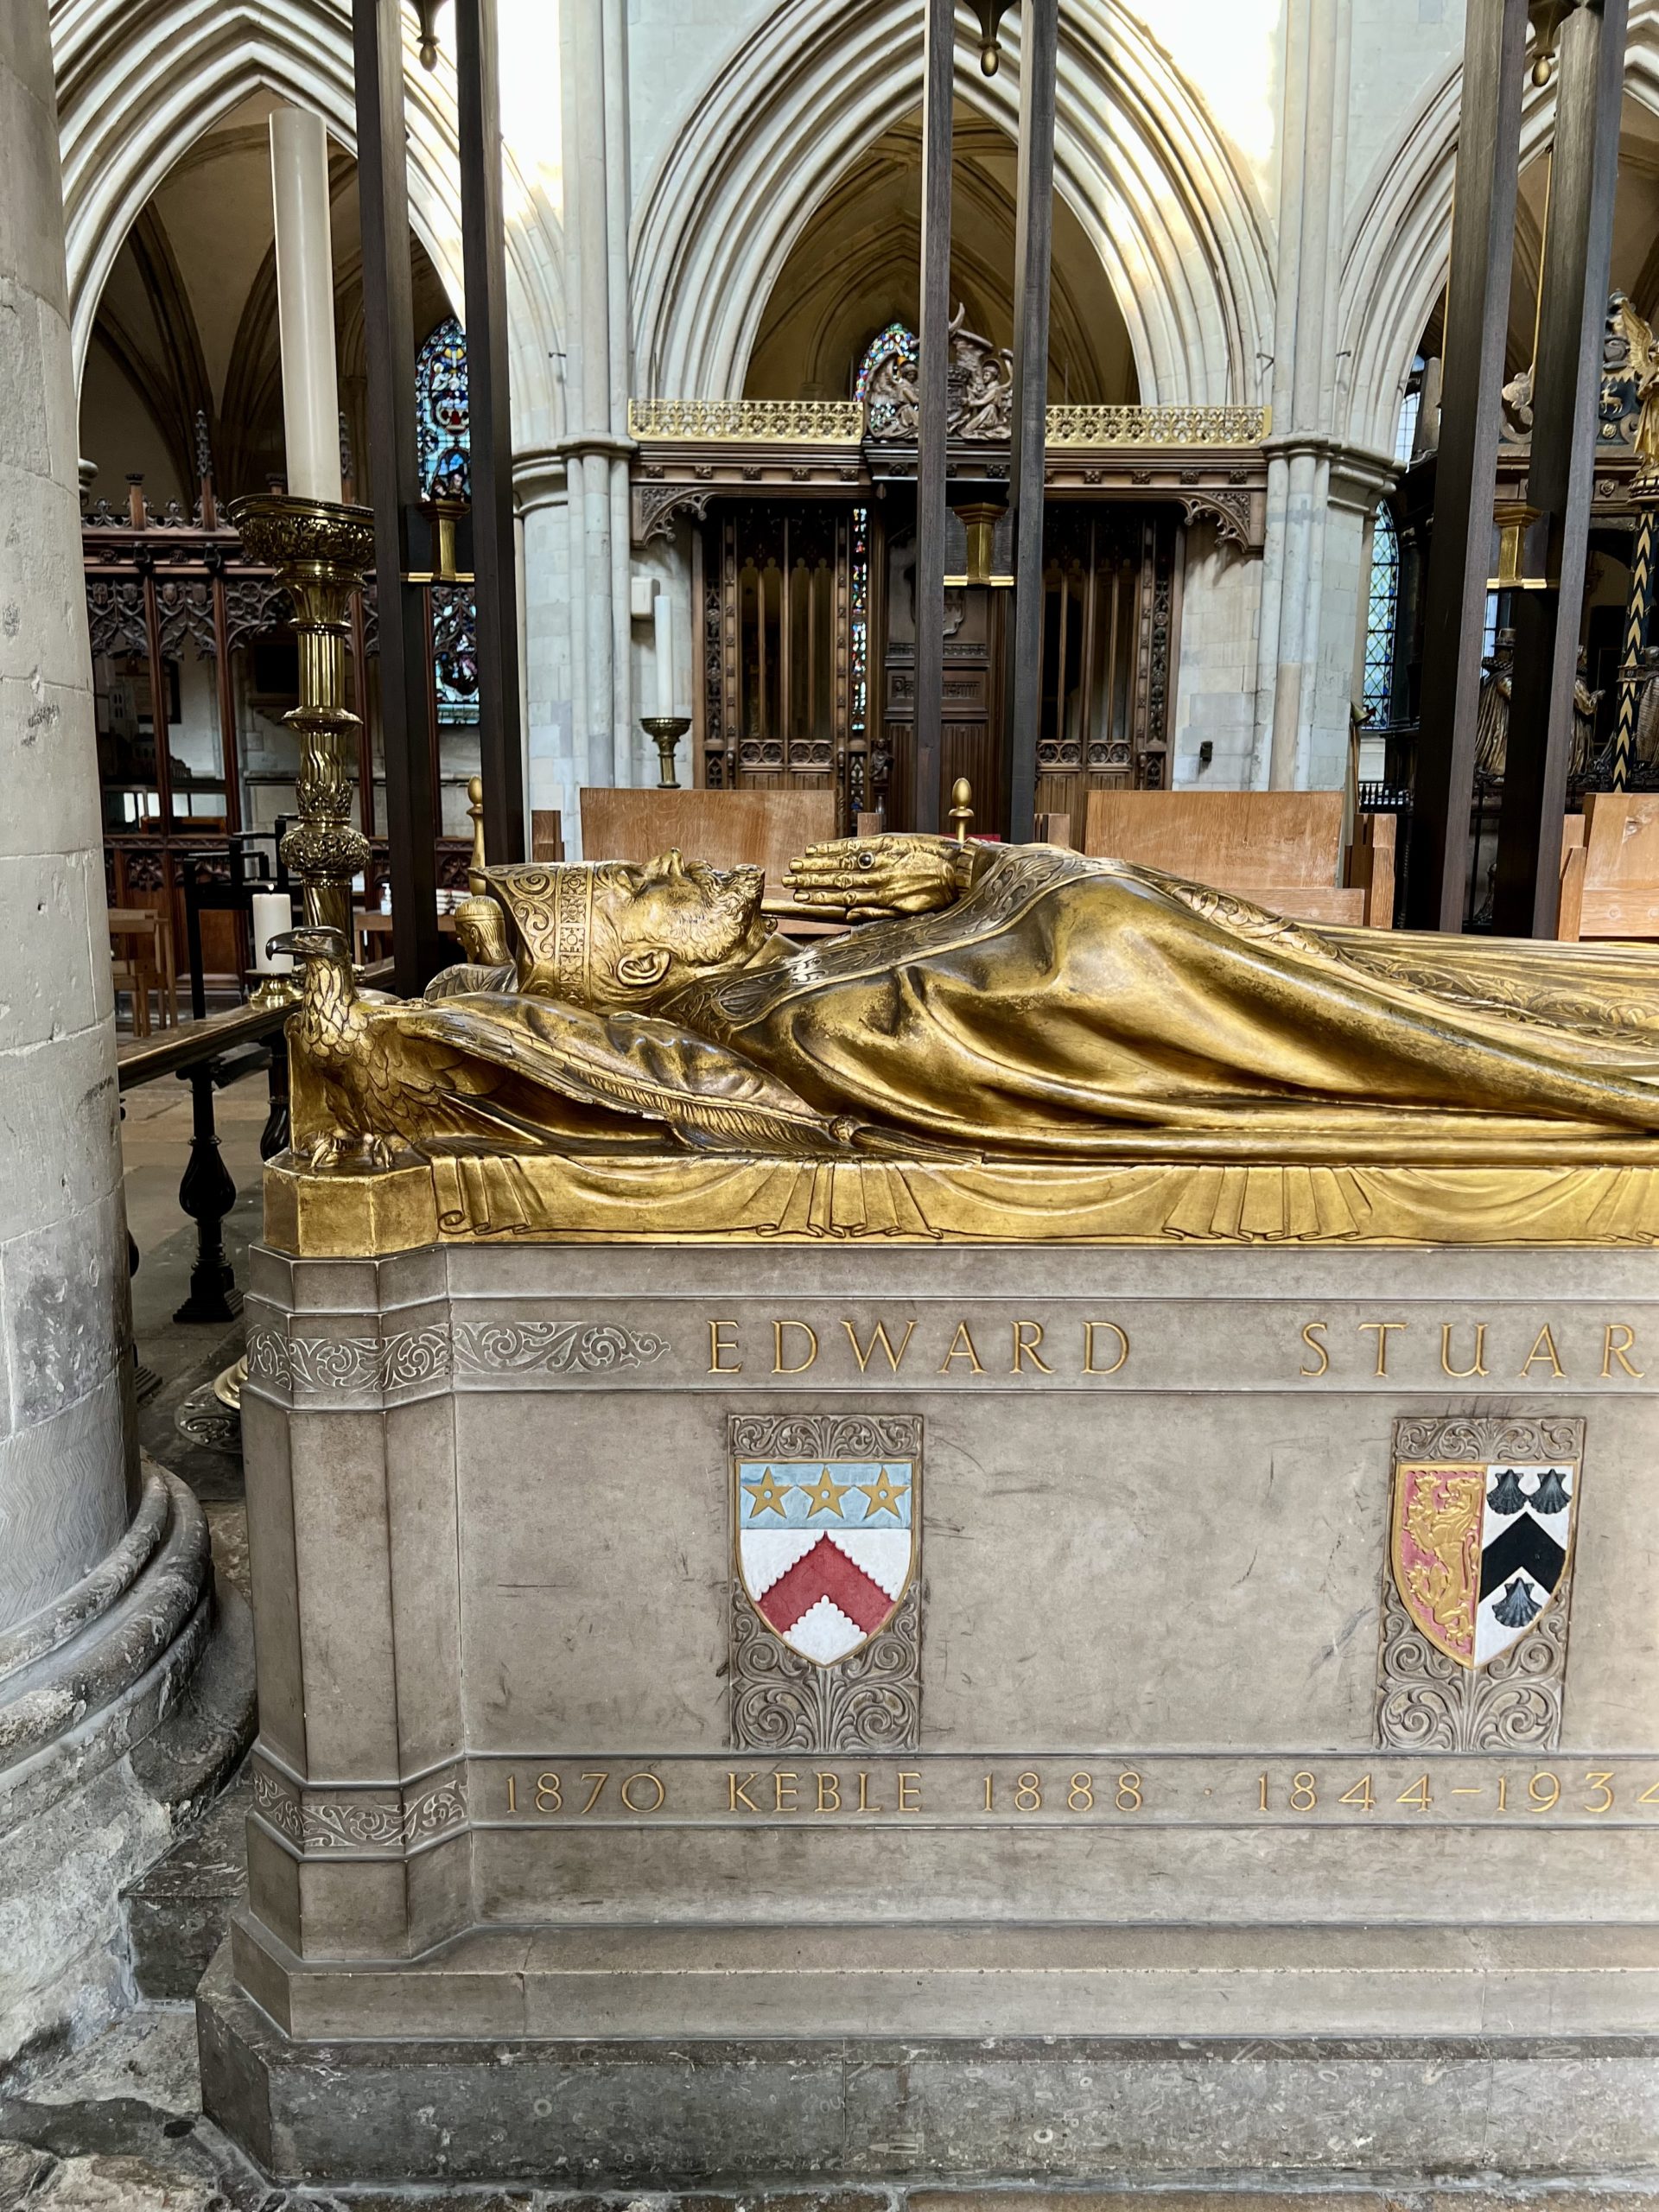 tomb of Edward Stuart Talbot